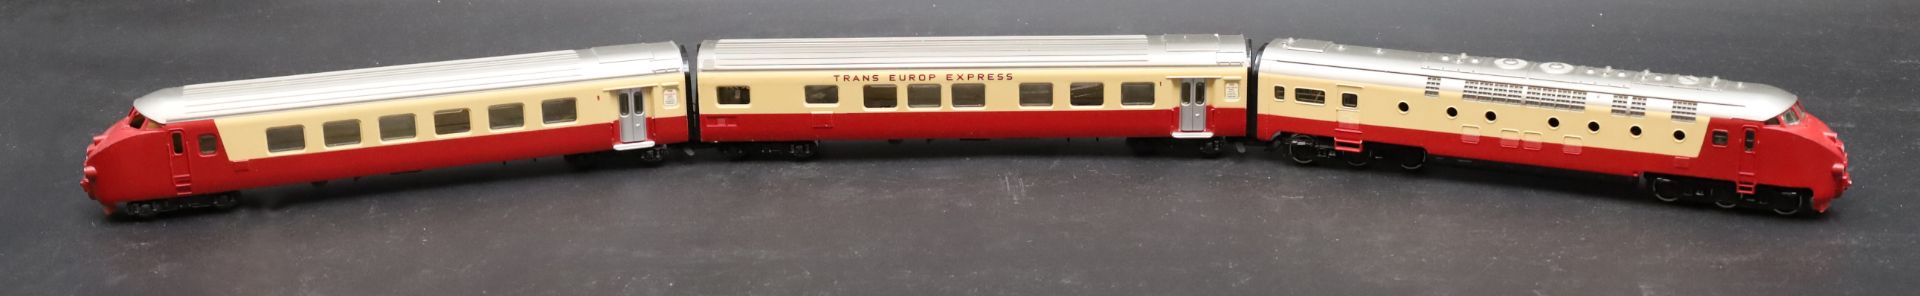 MÄRKLIN H0 Gauge. Trans Europ Express. Model railway.